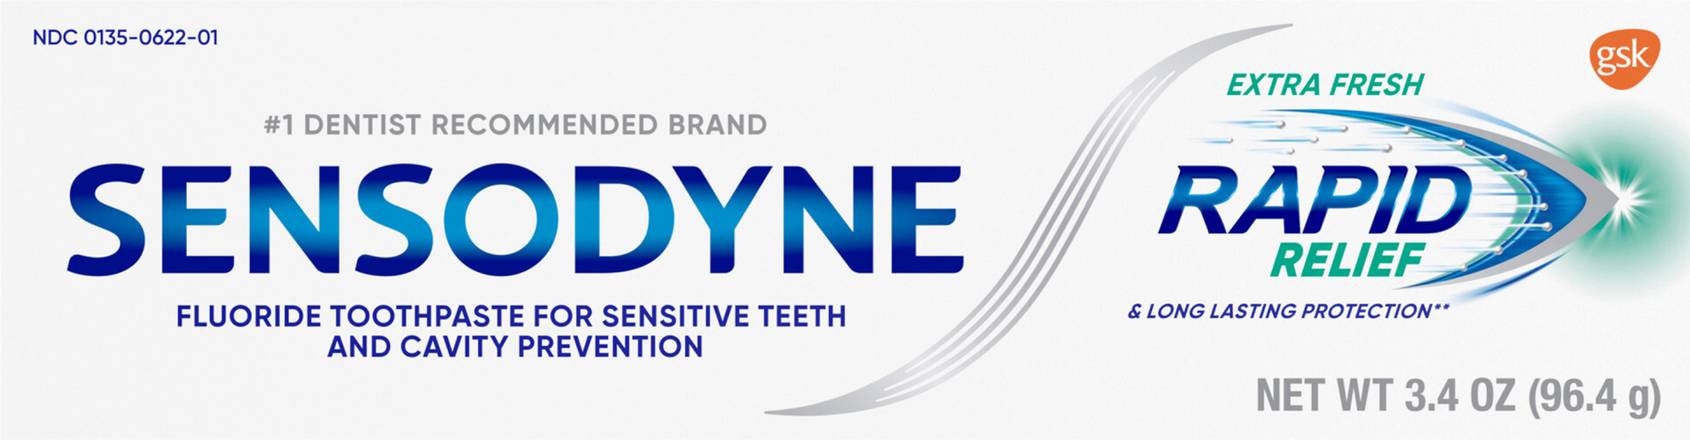 Sensodyne Extra Fresh Rapid Relief Fluoride Toothpaste